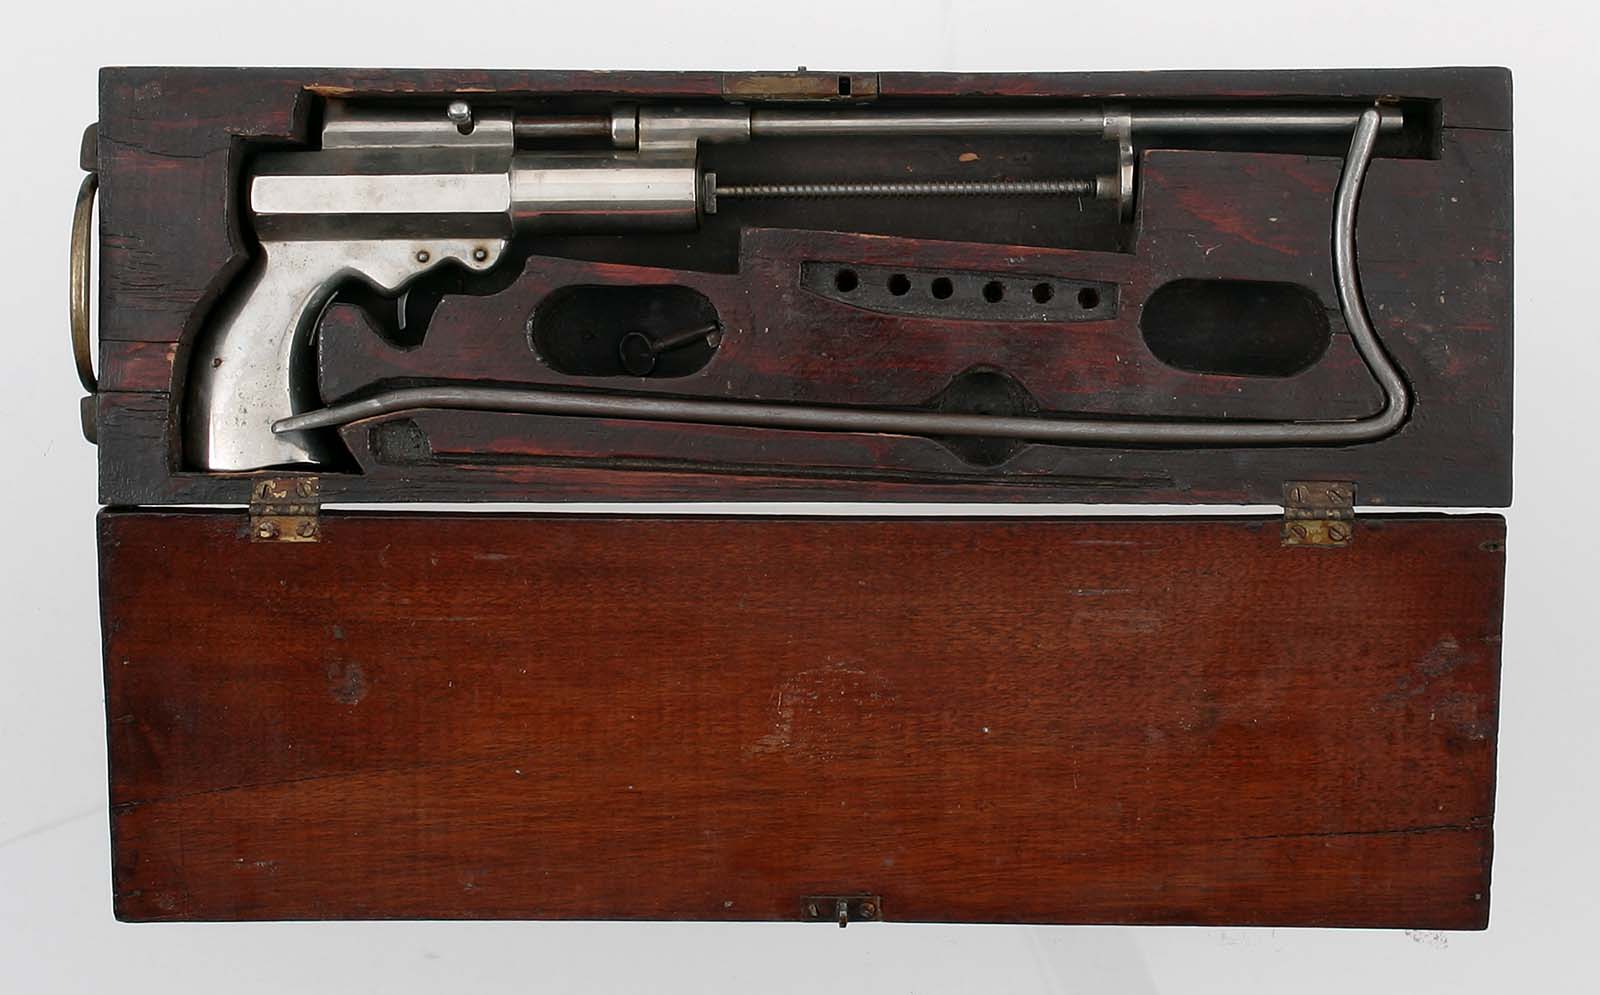 Air gun, ca. 1875-1885. Bedford (Quackenbush). Gift of Thomas K. Hutchinson. 1993.8.61